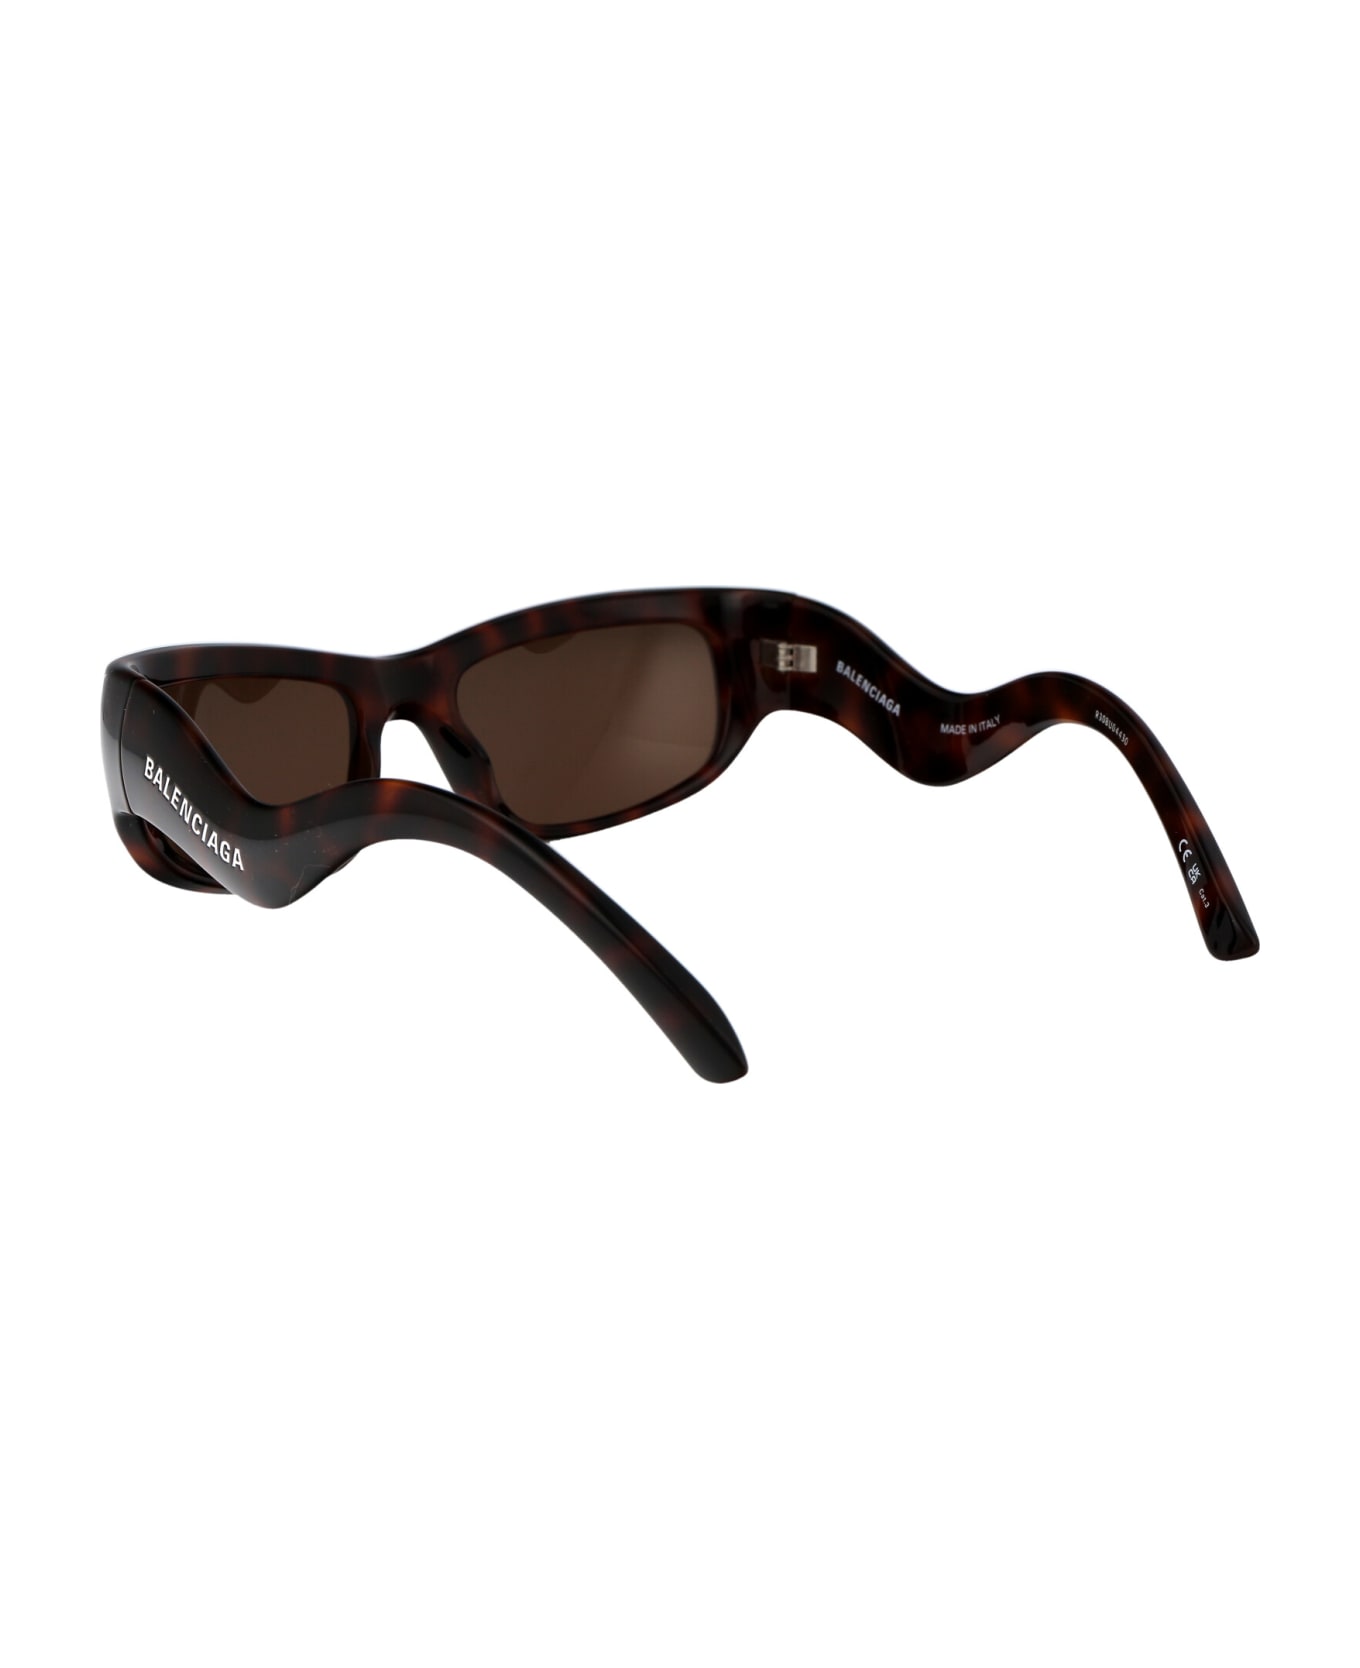 Balenciaga Eyewear Bb0320s Sunglasses - 002 HAVANA HAVANA BROWN サングラス